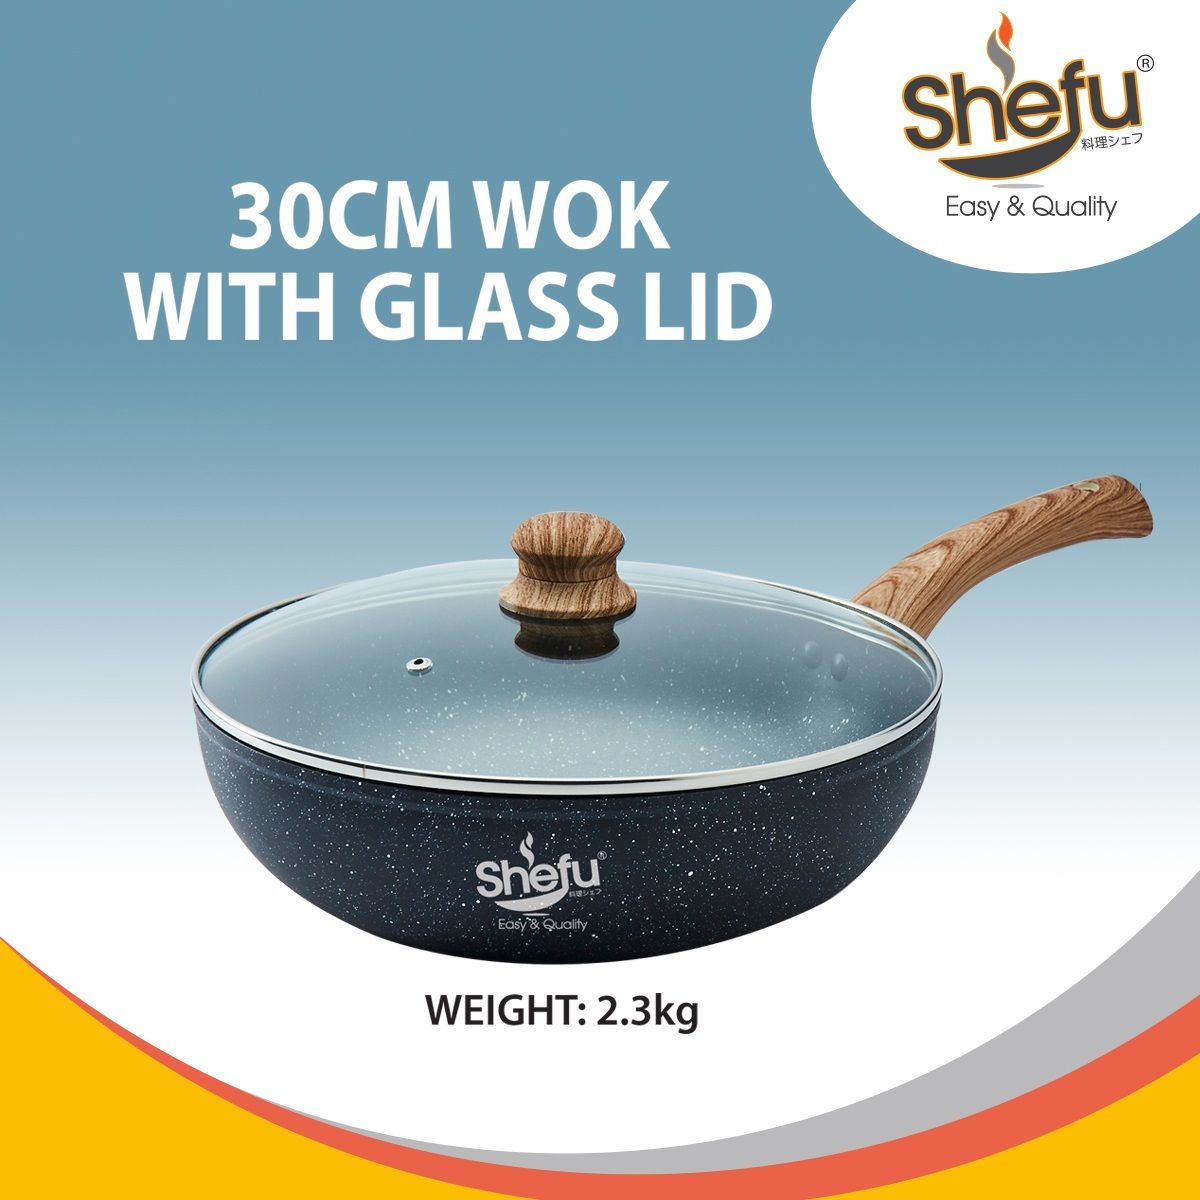 Shefu 30cm Wok Energy Saving With Glass Lid